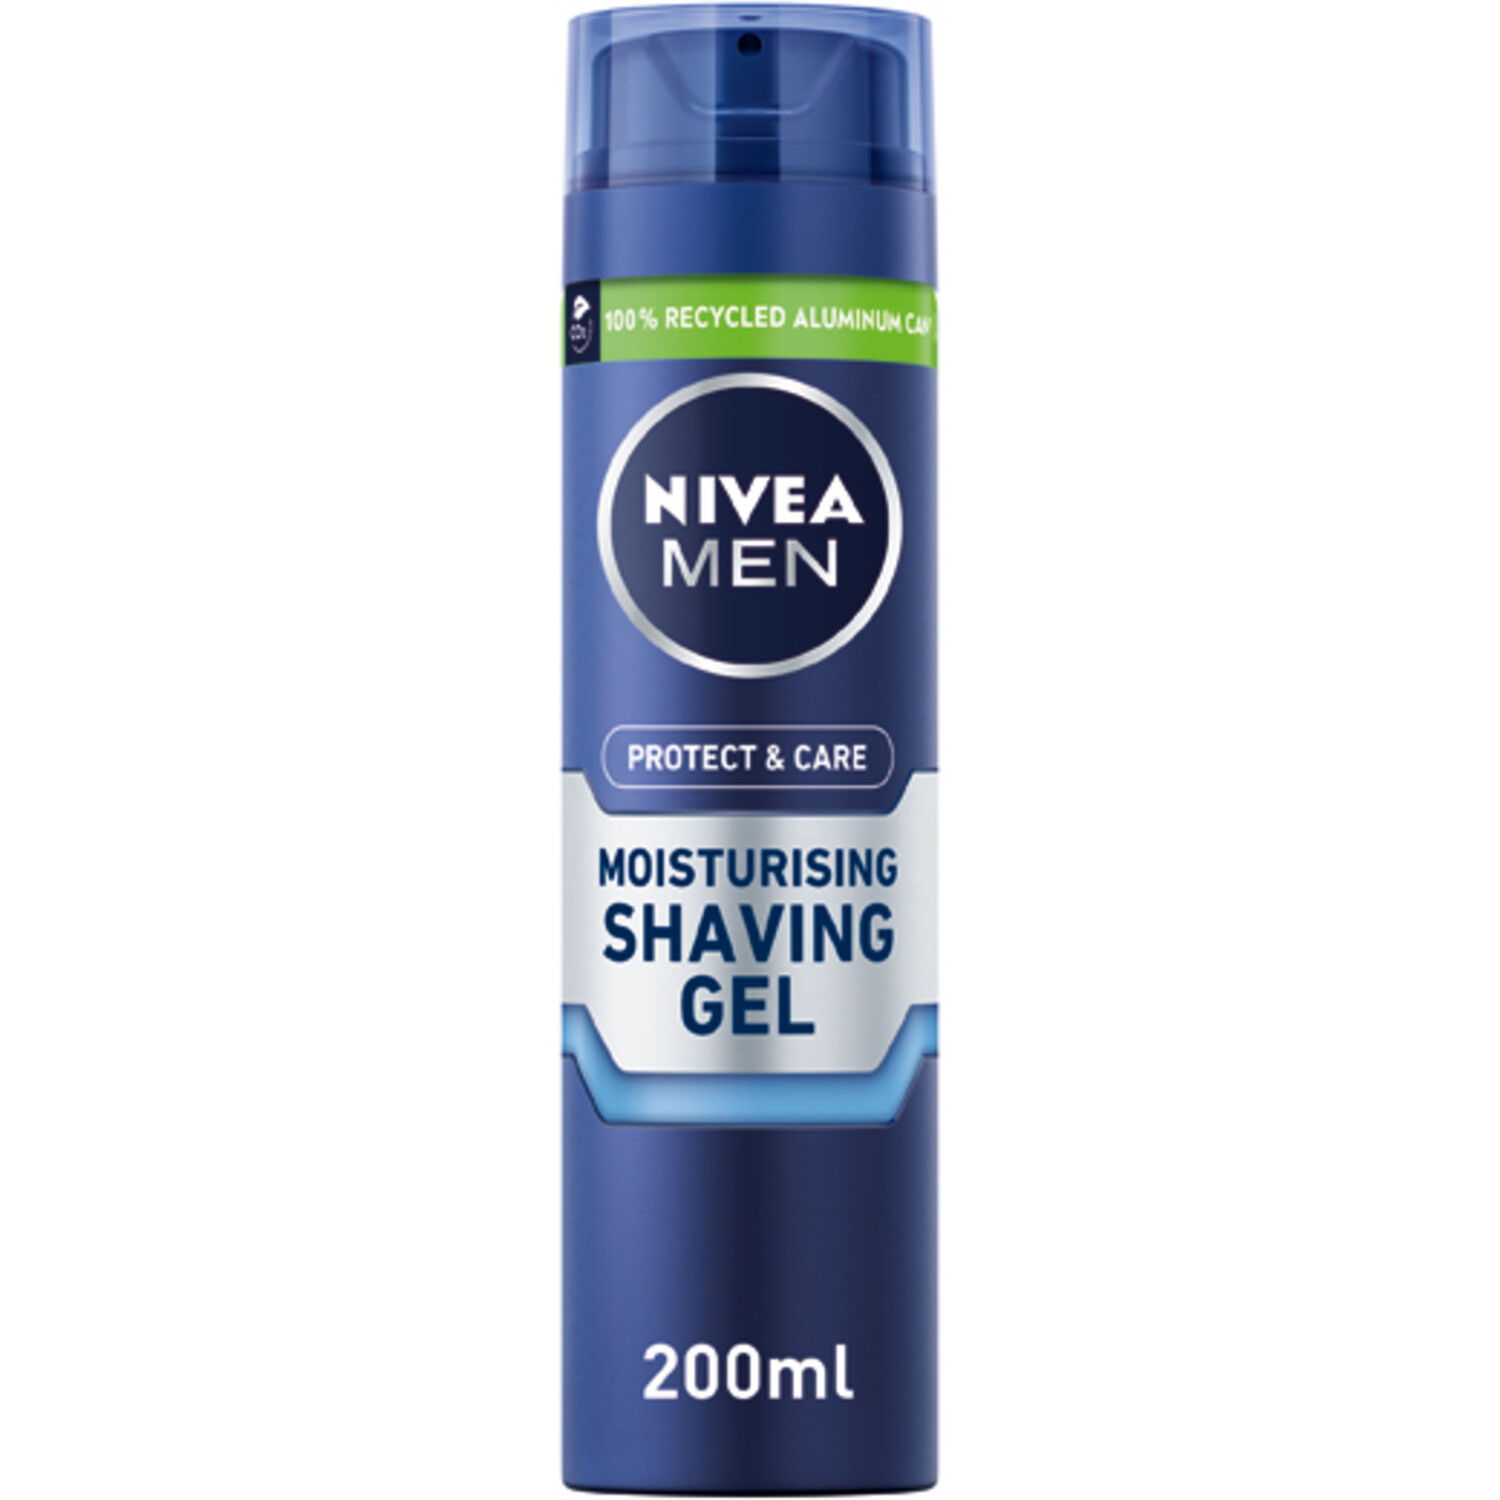 NIVEA MEN Protect & Care Moisturising Shaving Gel - Blue Image